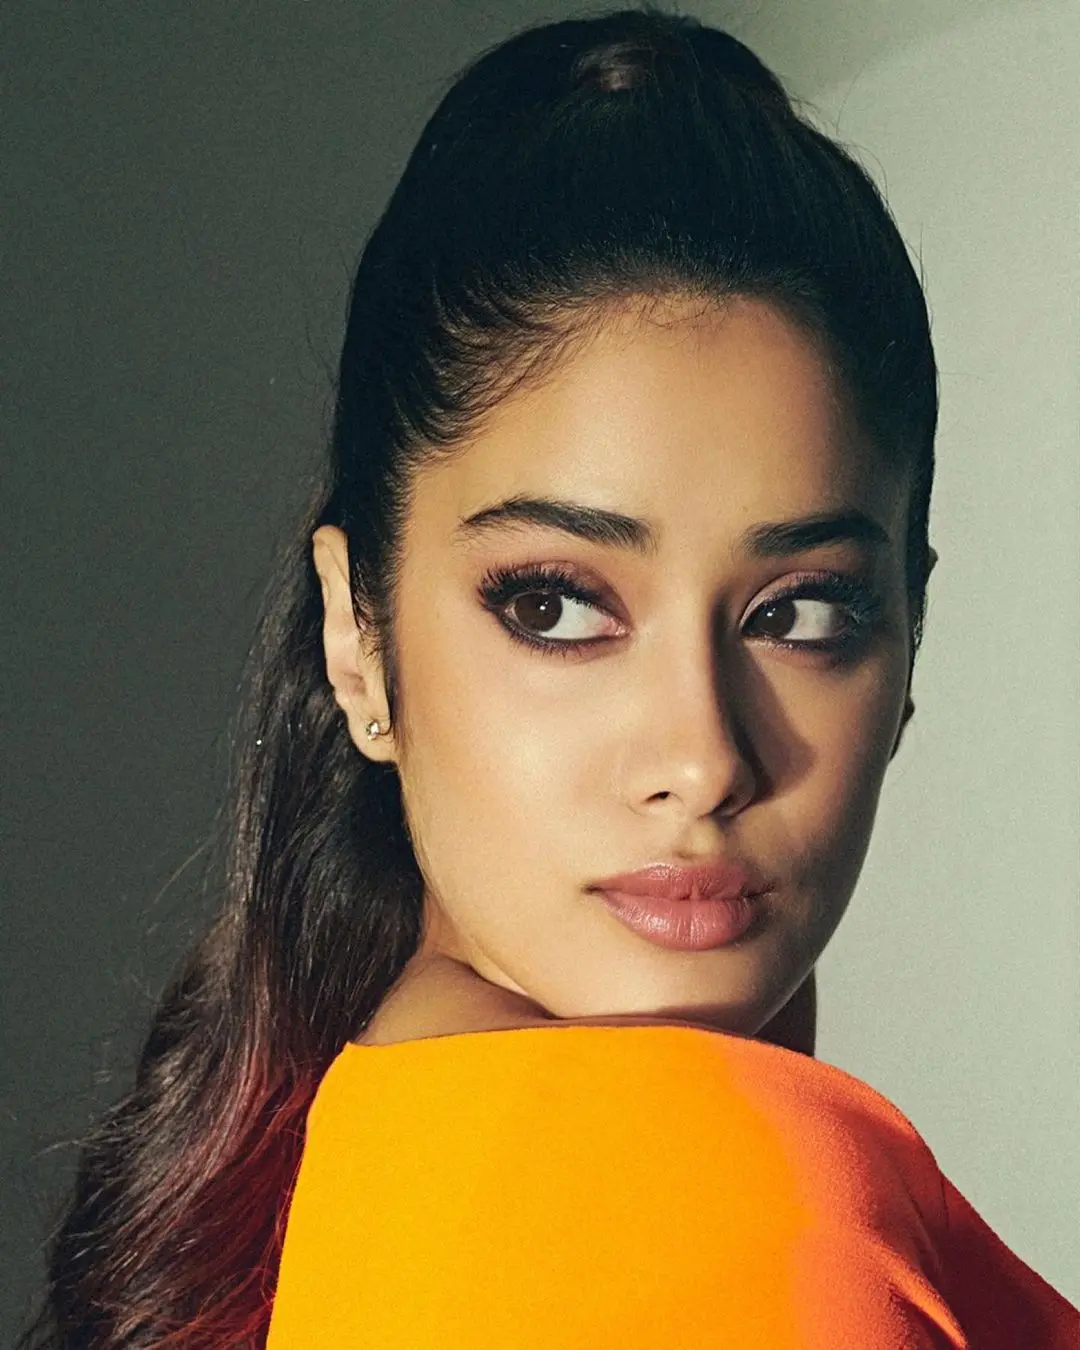 Janhvi Kapoor Photoshoot in short Orange Dress